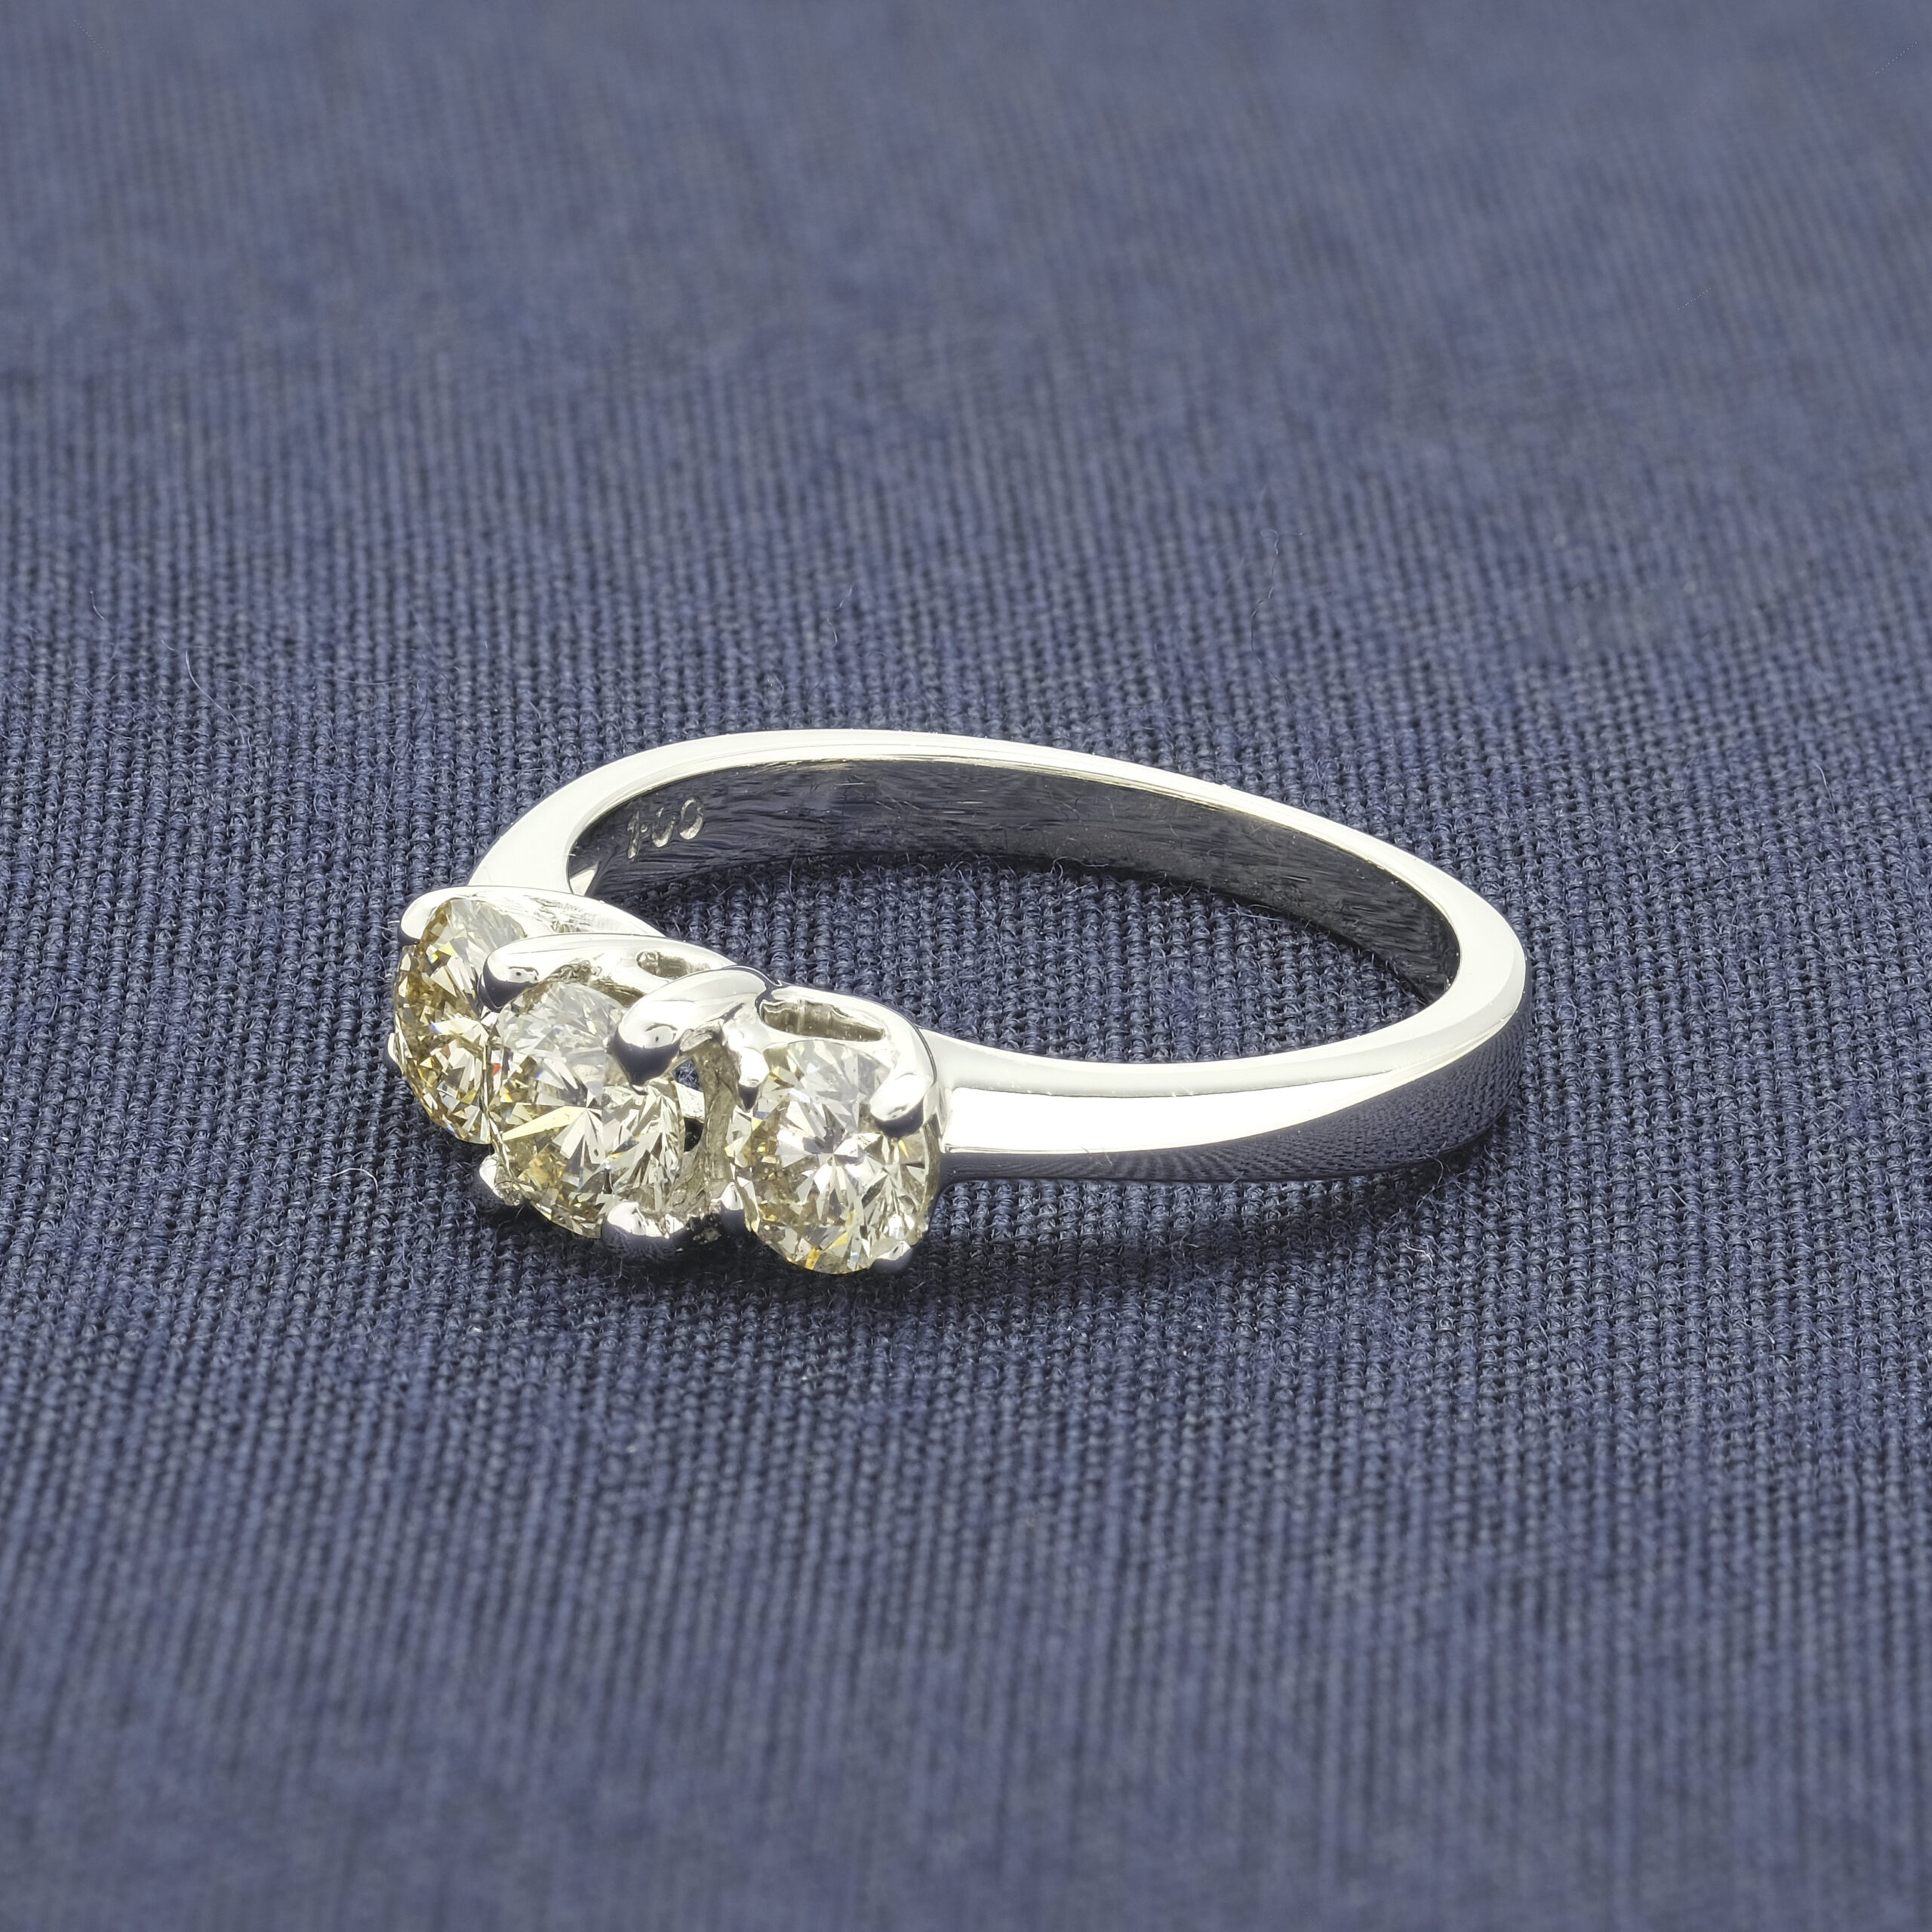 18ct White Gold 0.83ct Champagne Diamond Trilogy Ring
